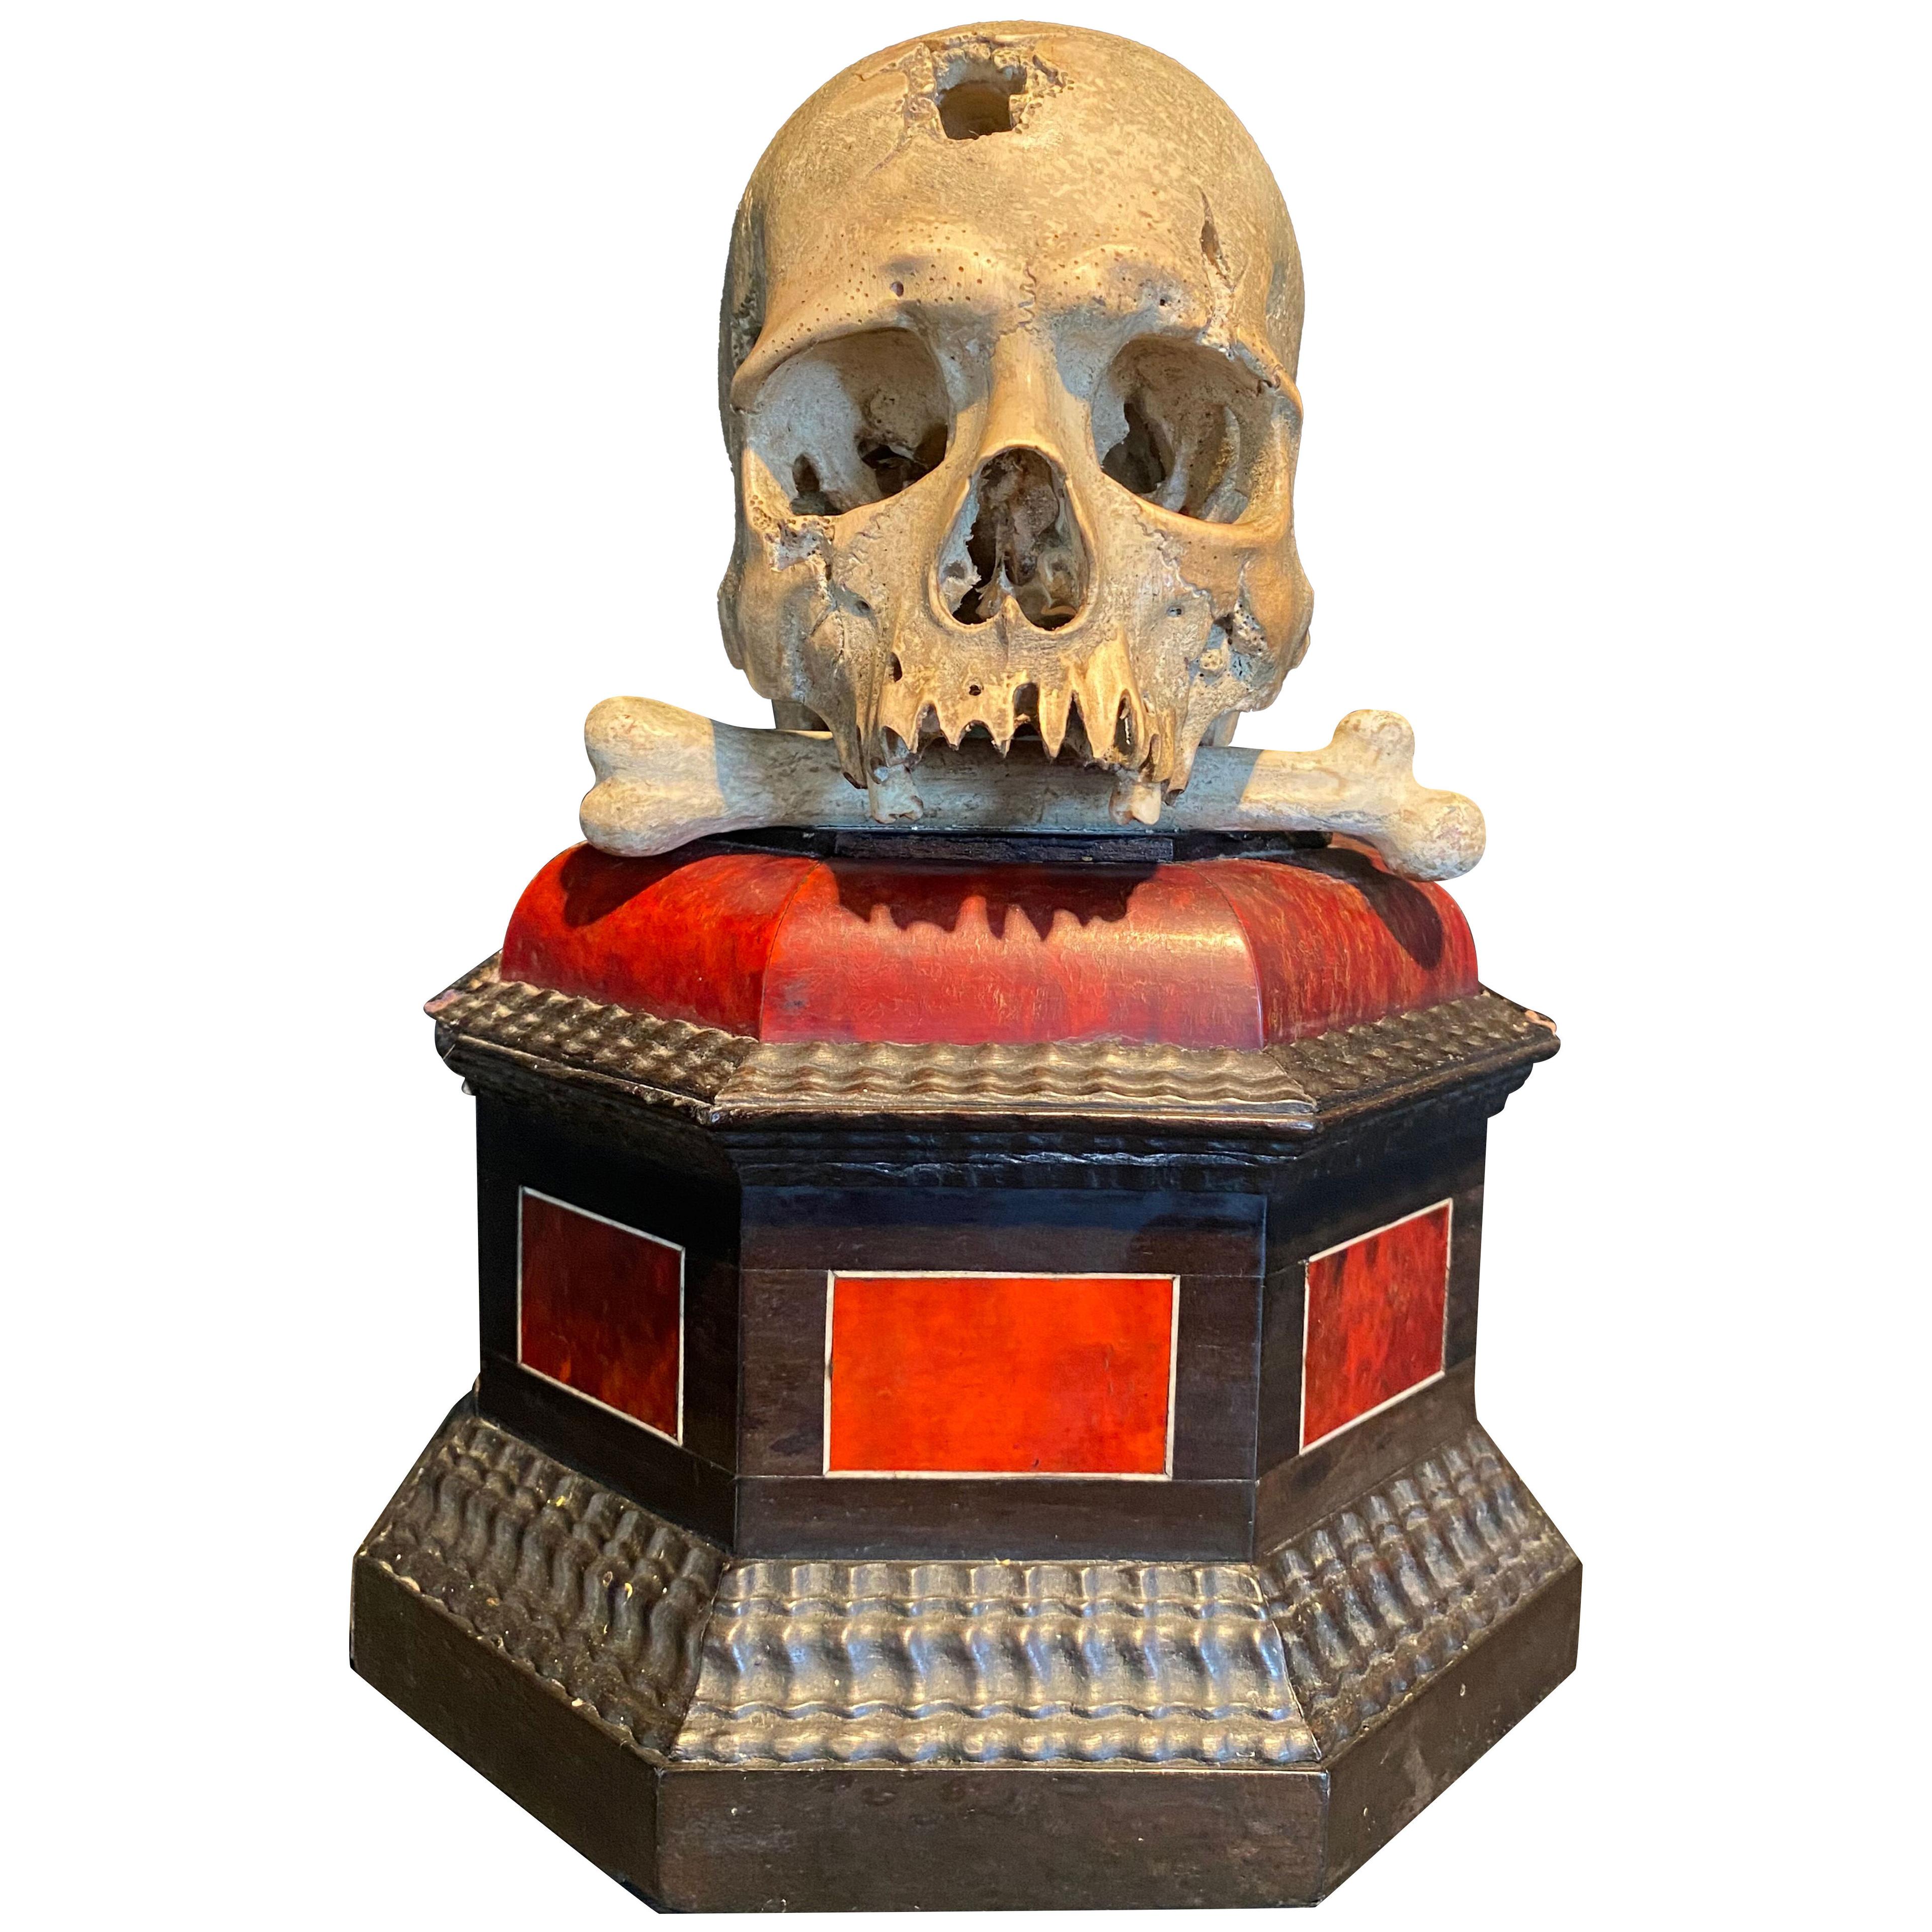 Antique Memento Mori Skull on a Wooden Base